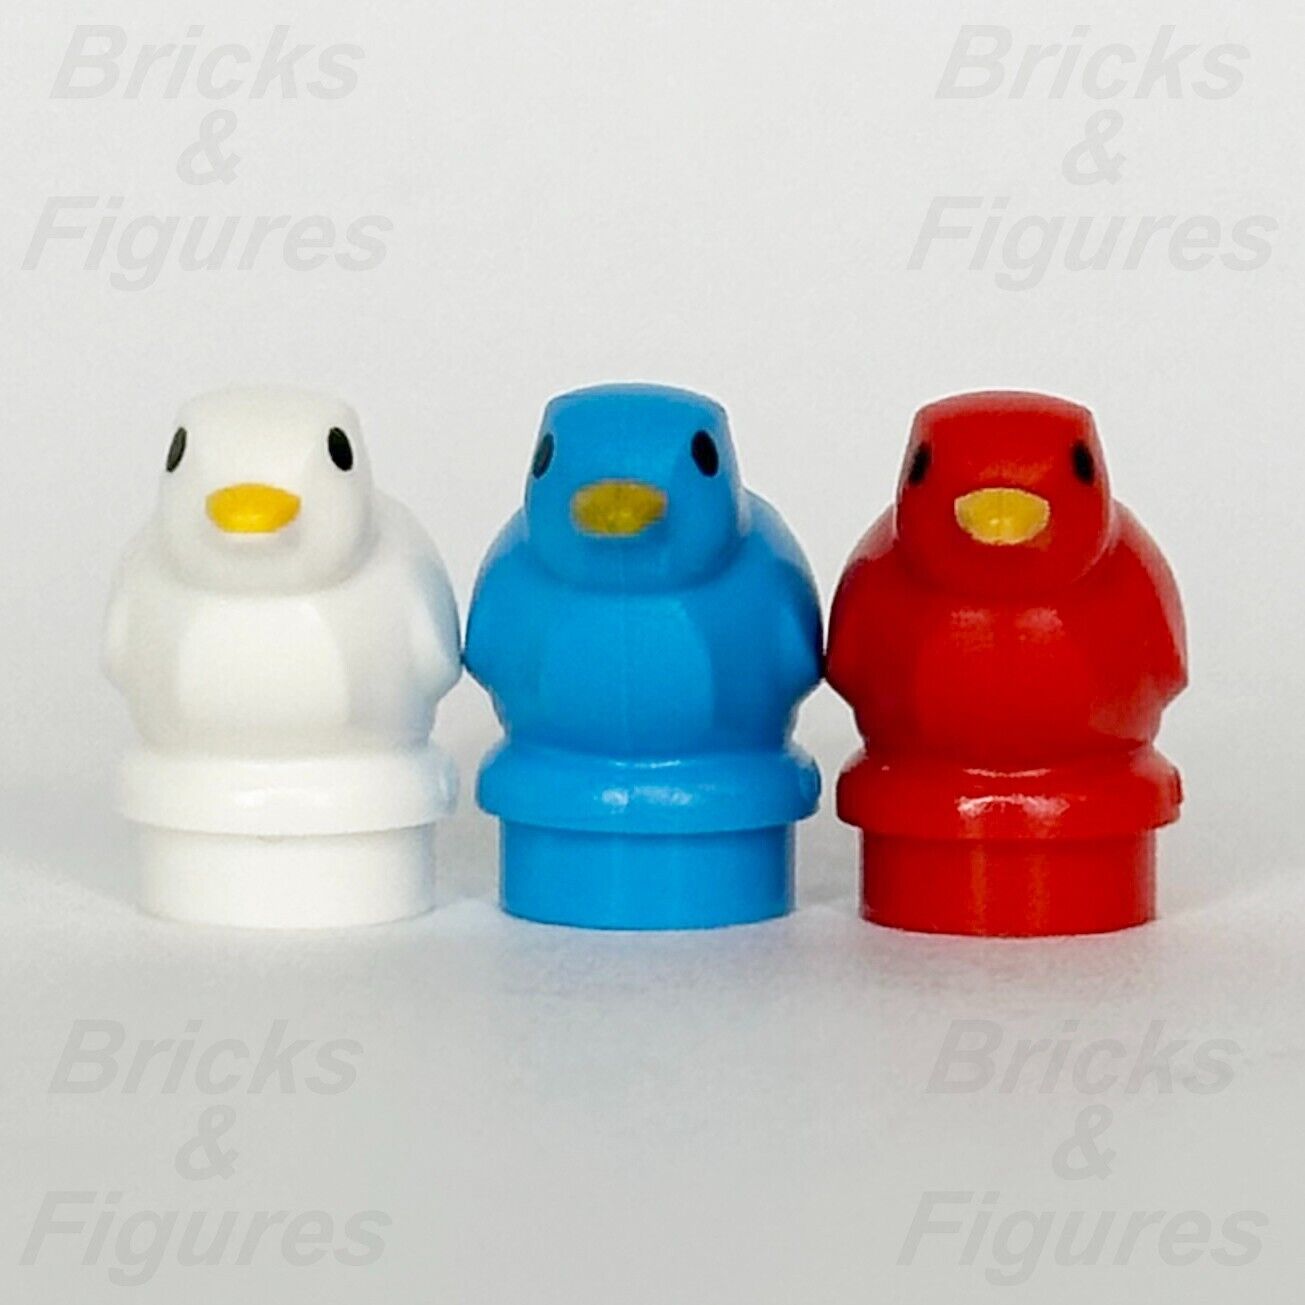 LEGO Small White Blue Red Bird Animal Minifigure Part x 3 Little Birds 41835pb01 - Bricks & Figures